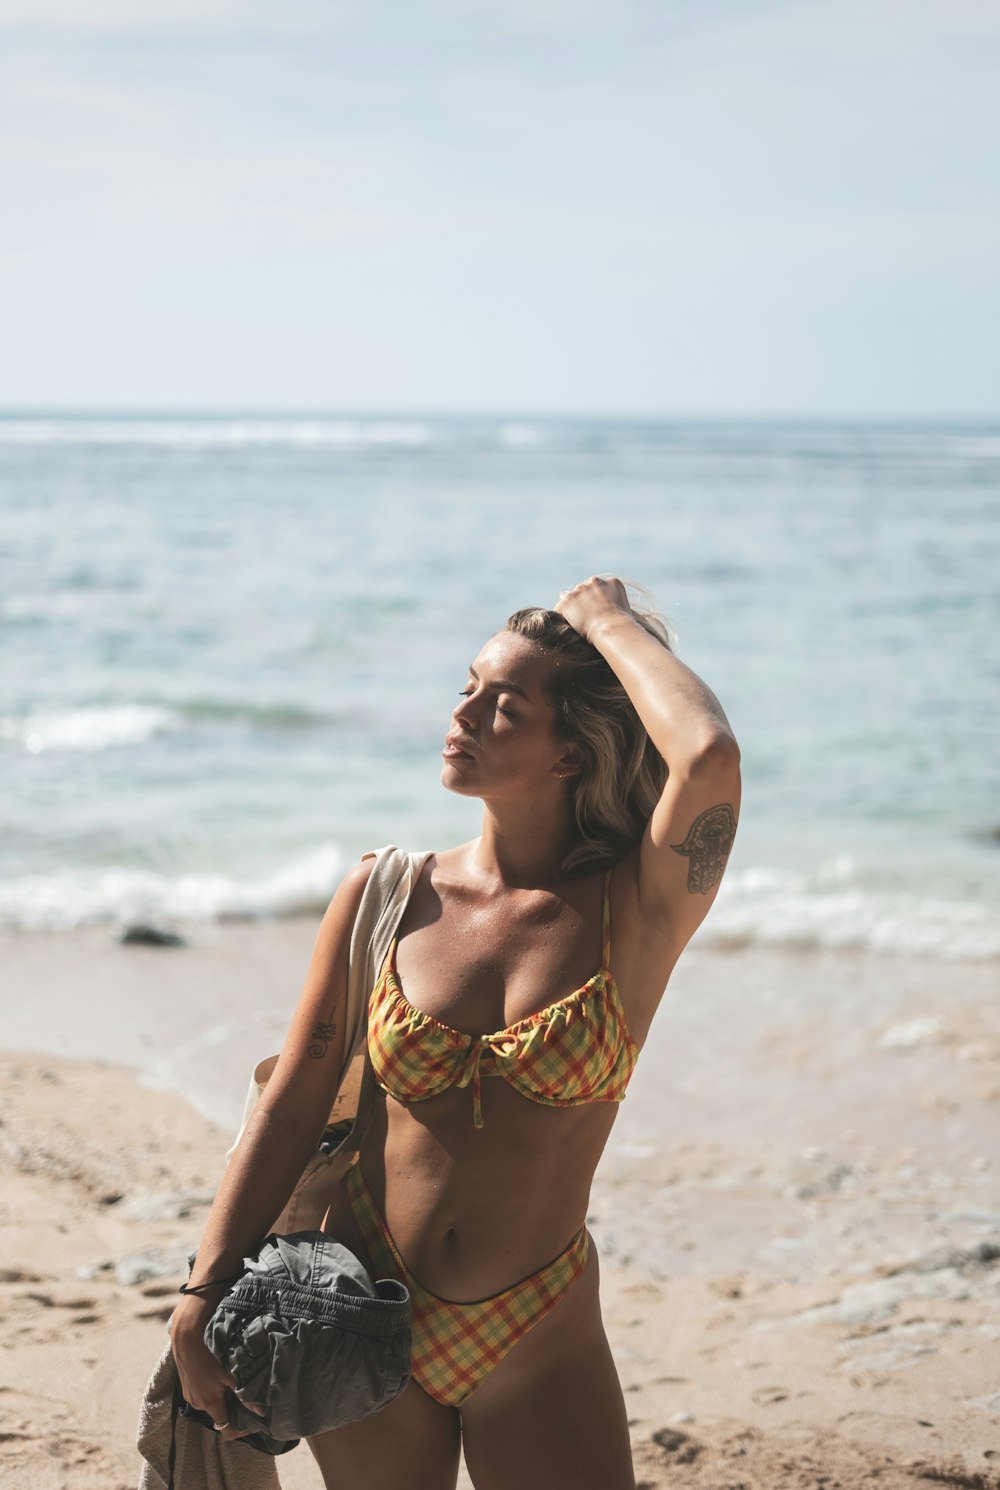 A woman in a bikini standing on a beach photo – Free Bali Image on Unsplash